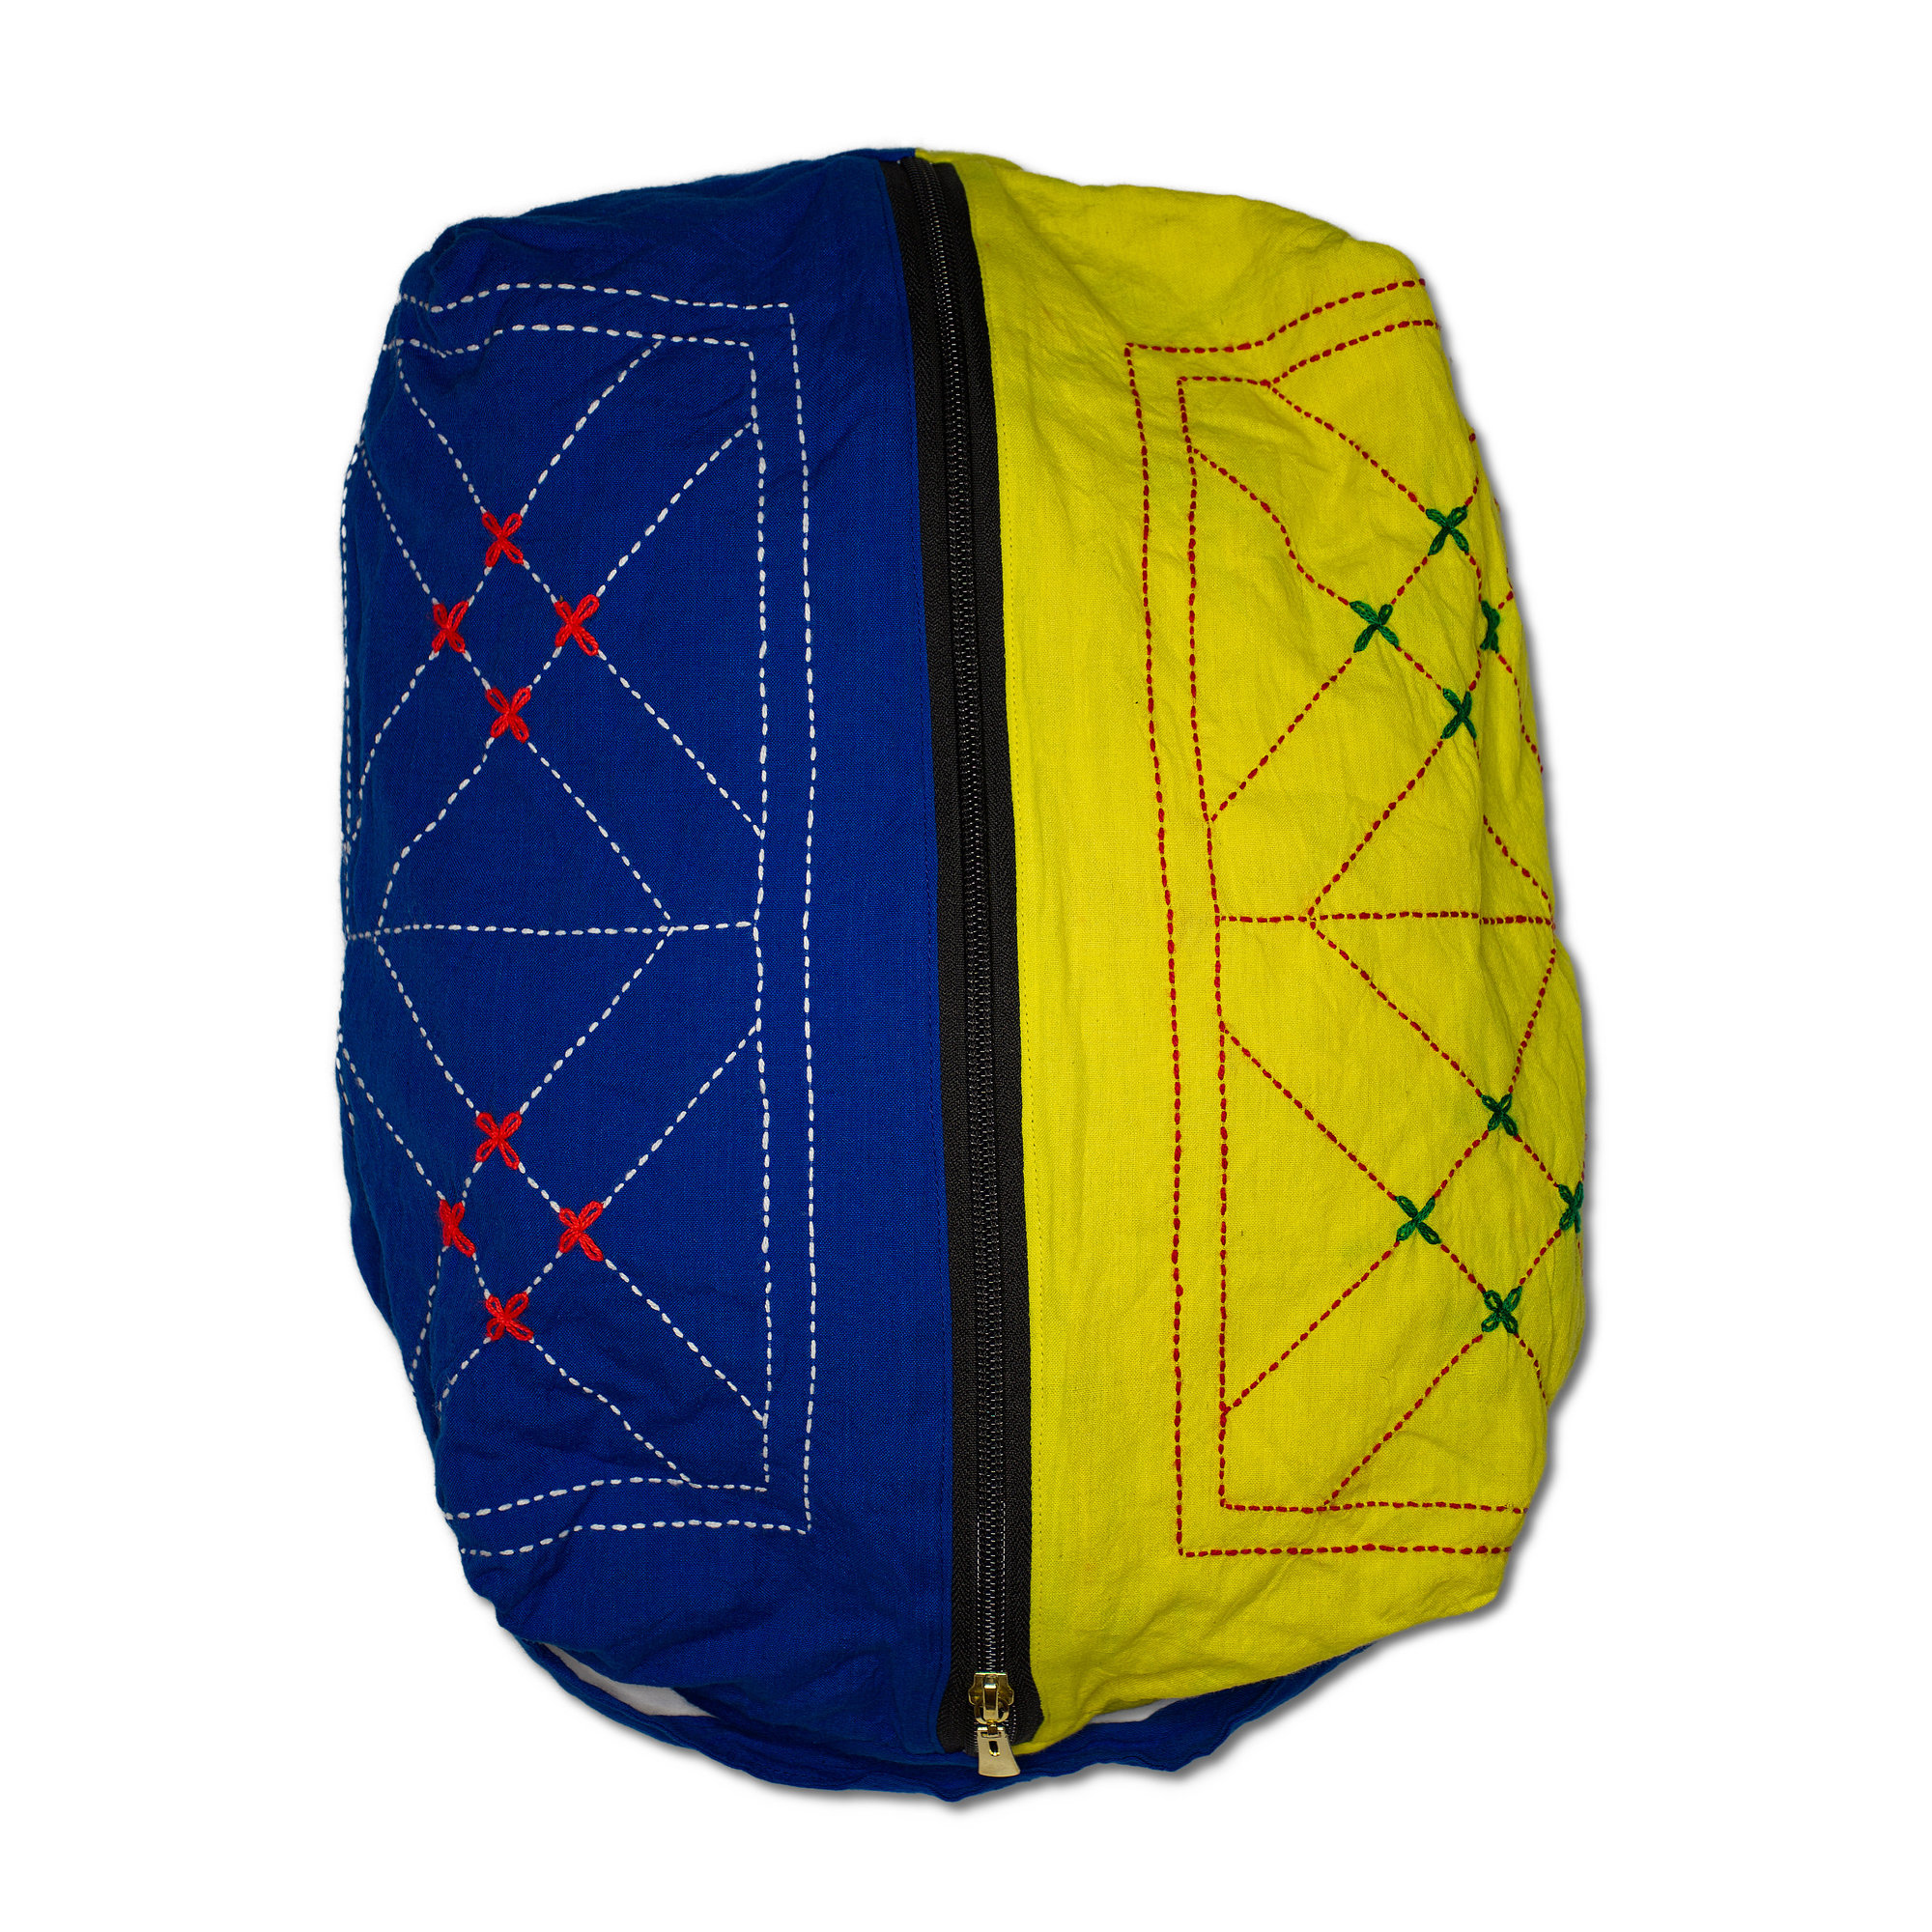 Pouch Bag - Kurigram (geometric) Design In Suraiya (dark Blue) And Asha (yellow)